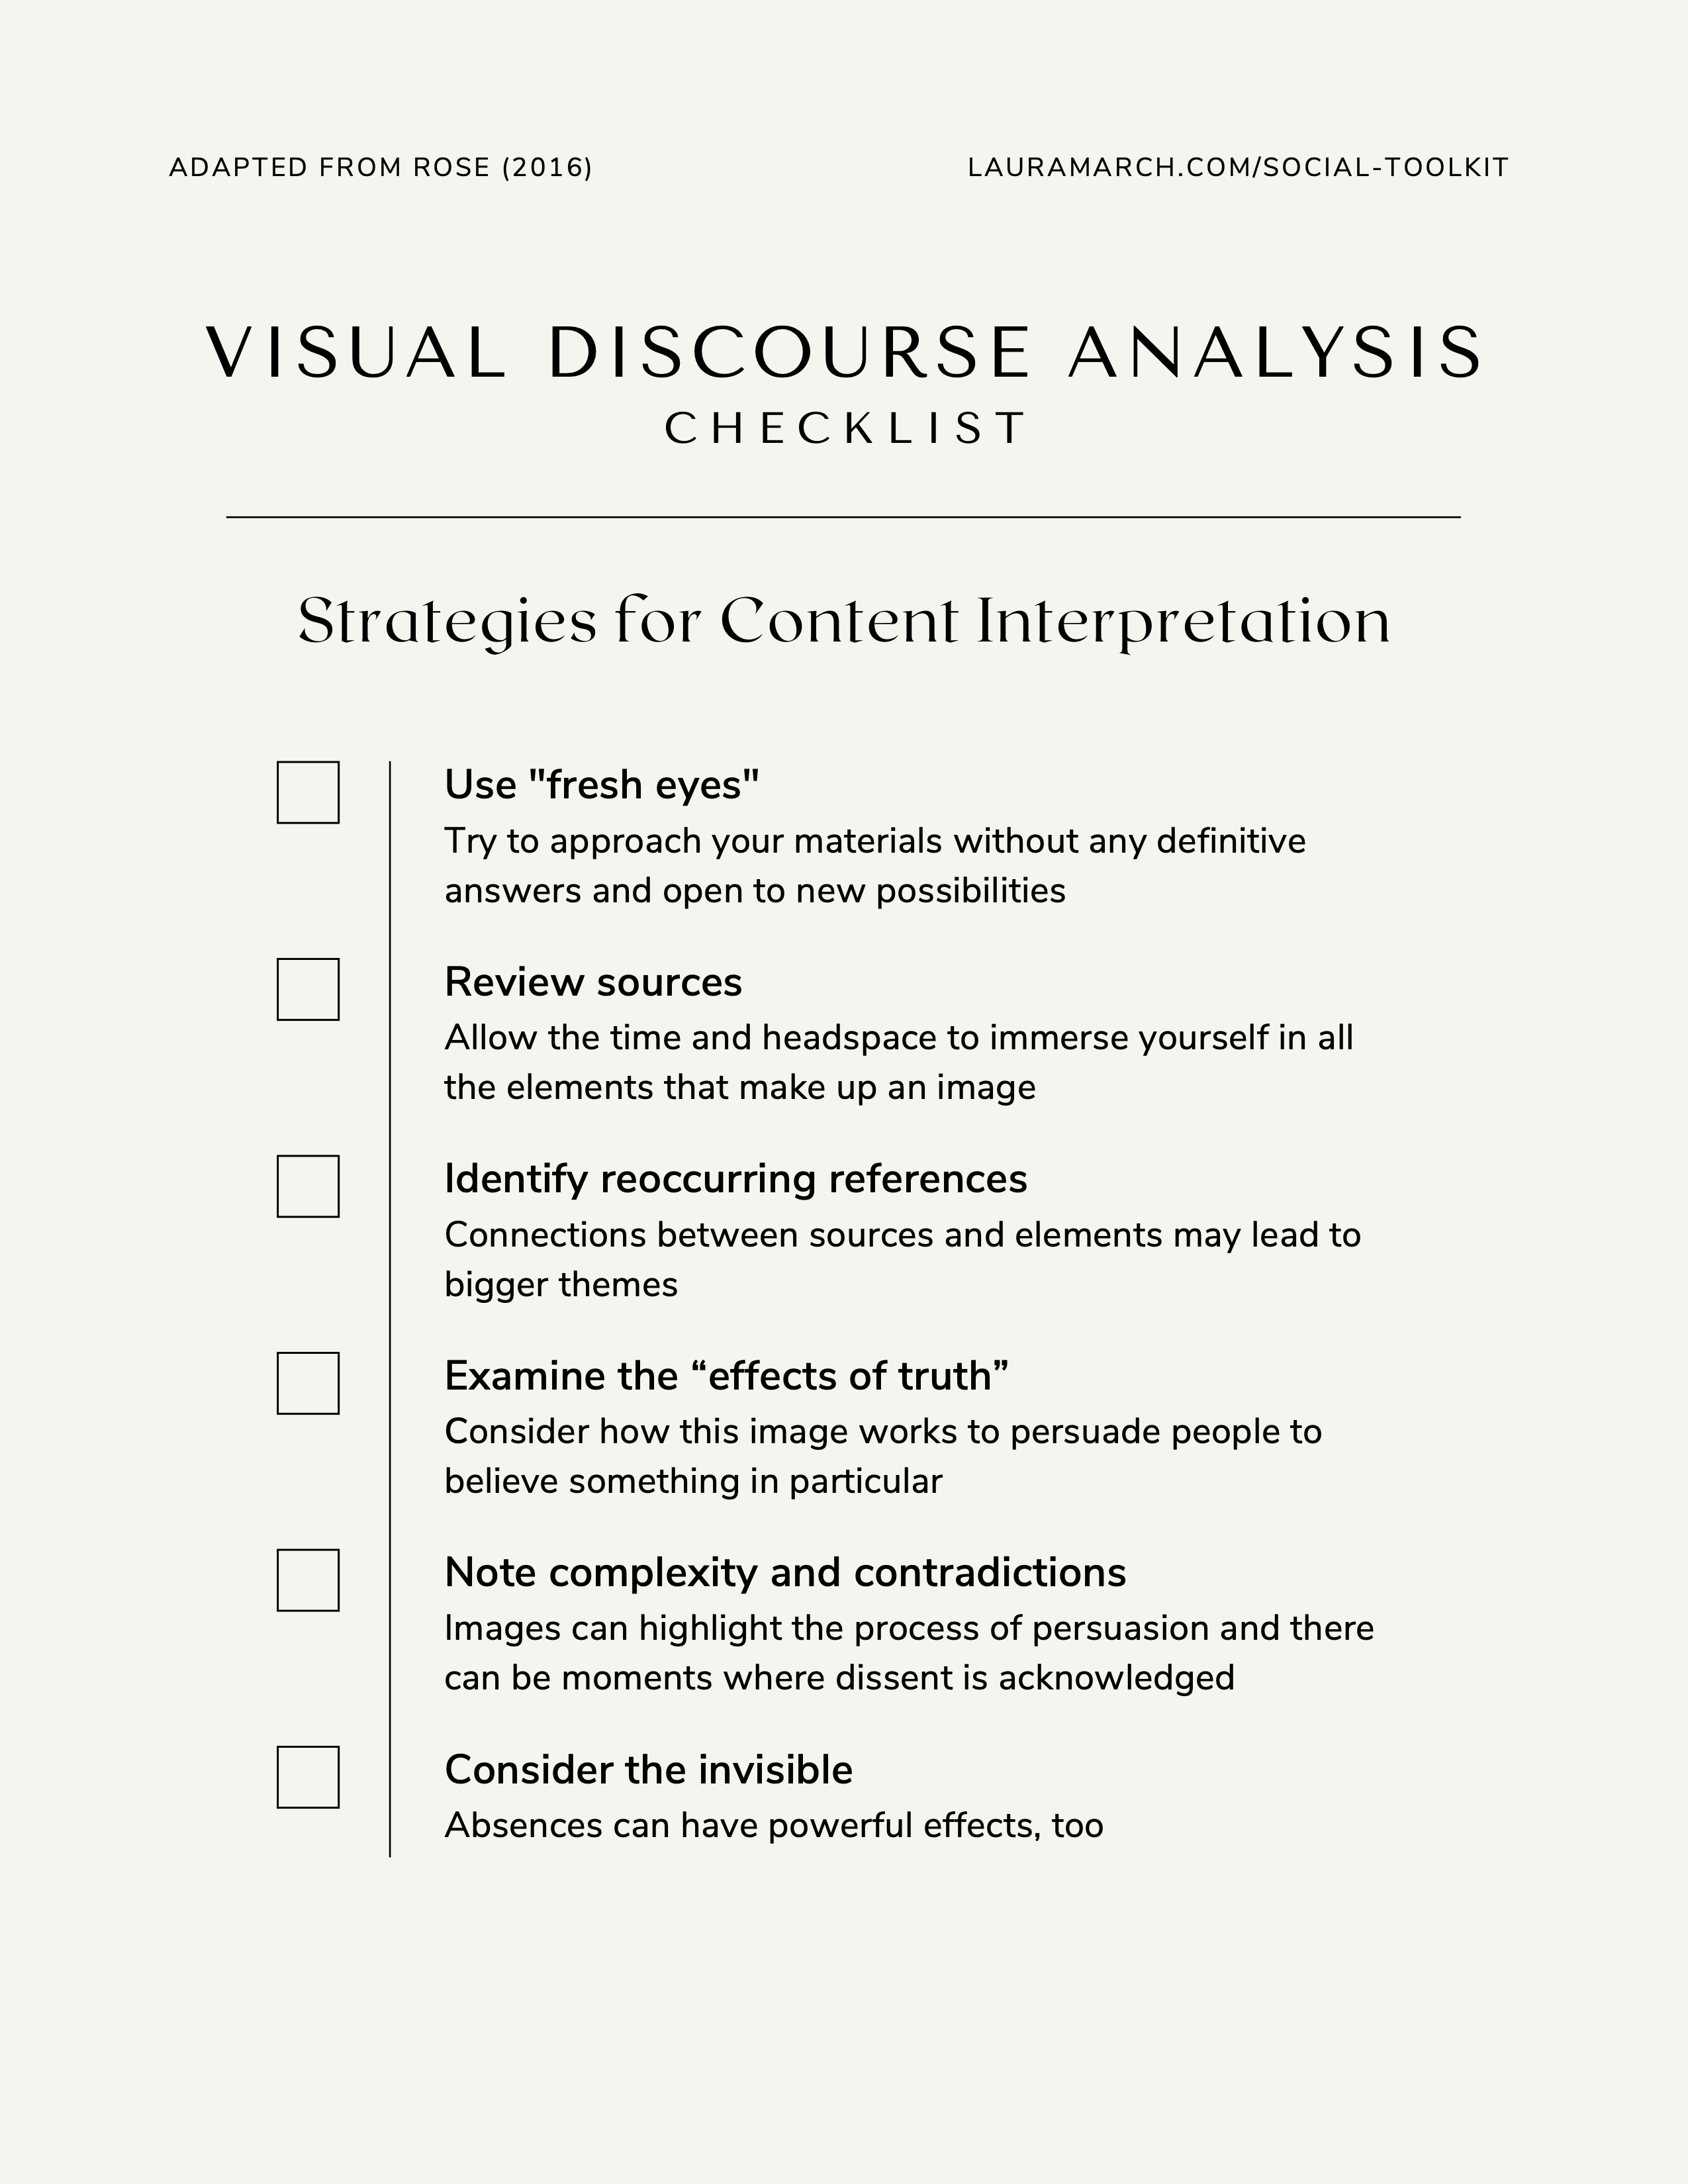 Visual Discourse Analysis Checklist-linked to PDF